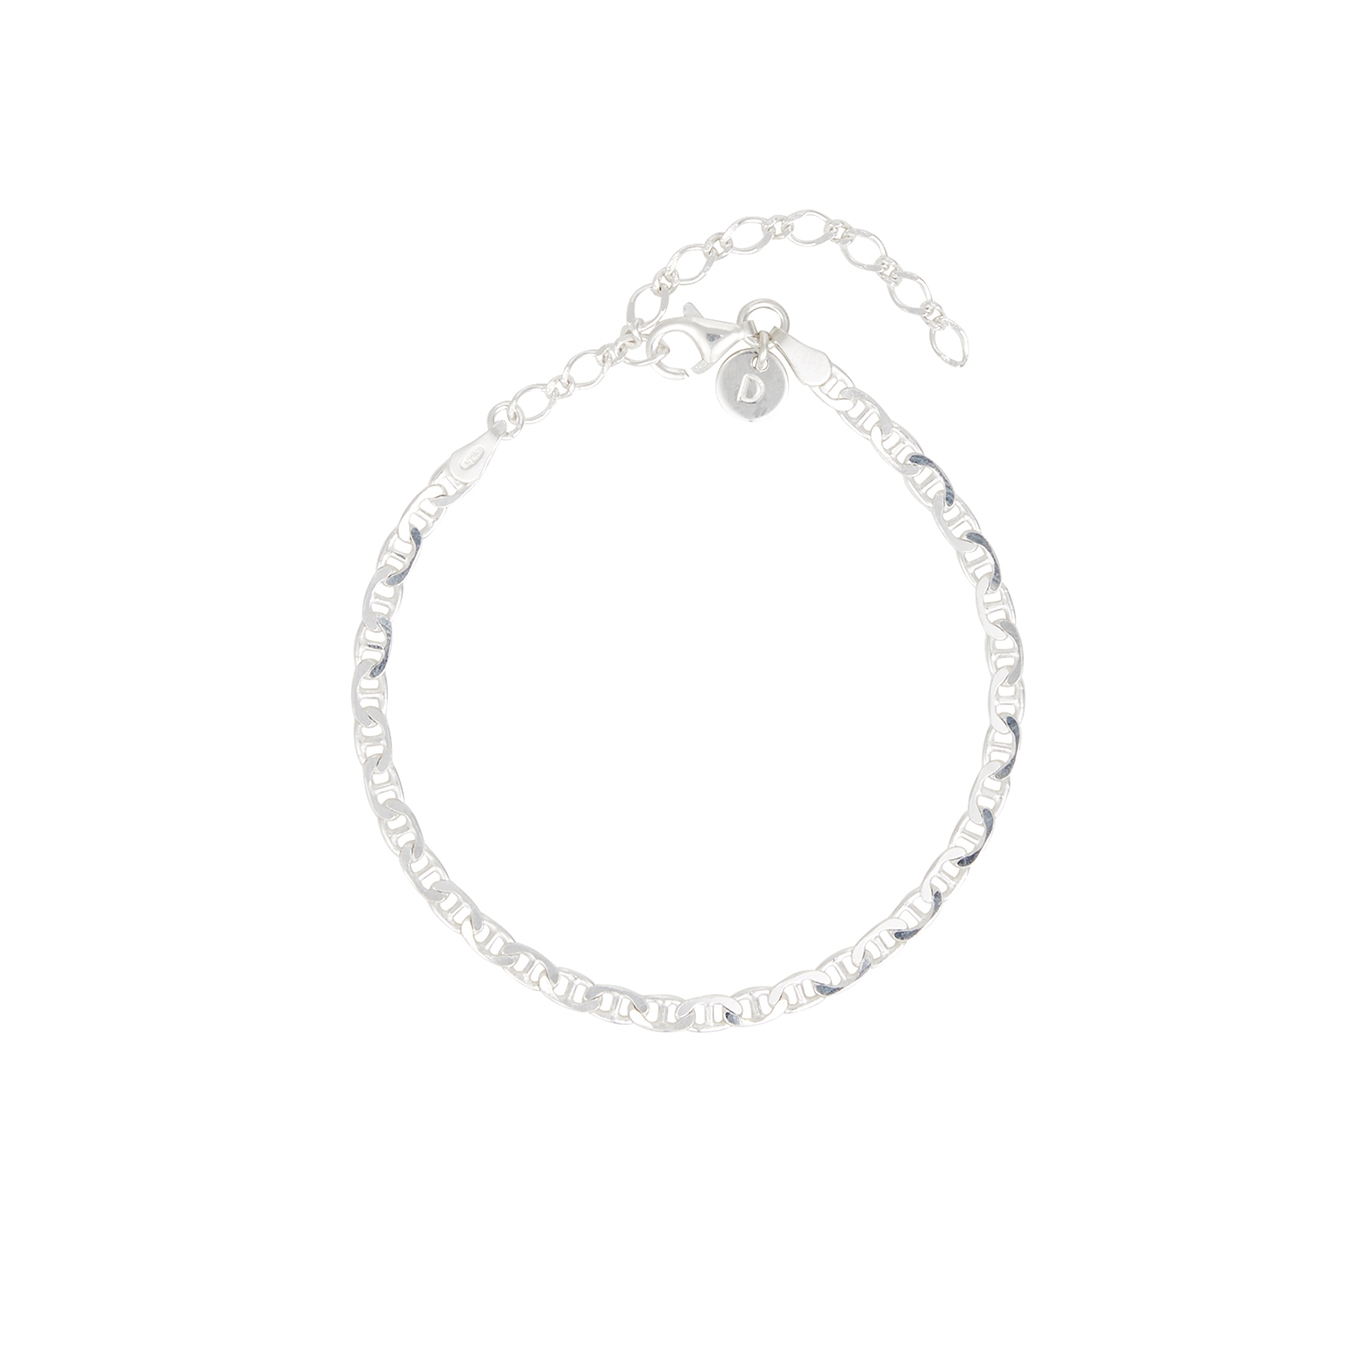 Daisy London Infinity Sterling Silver Chain Bracelet